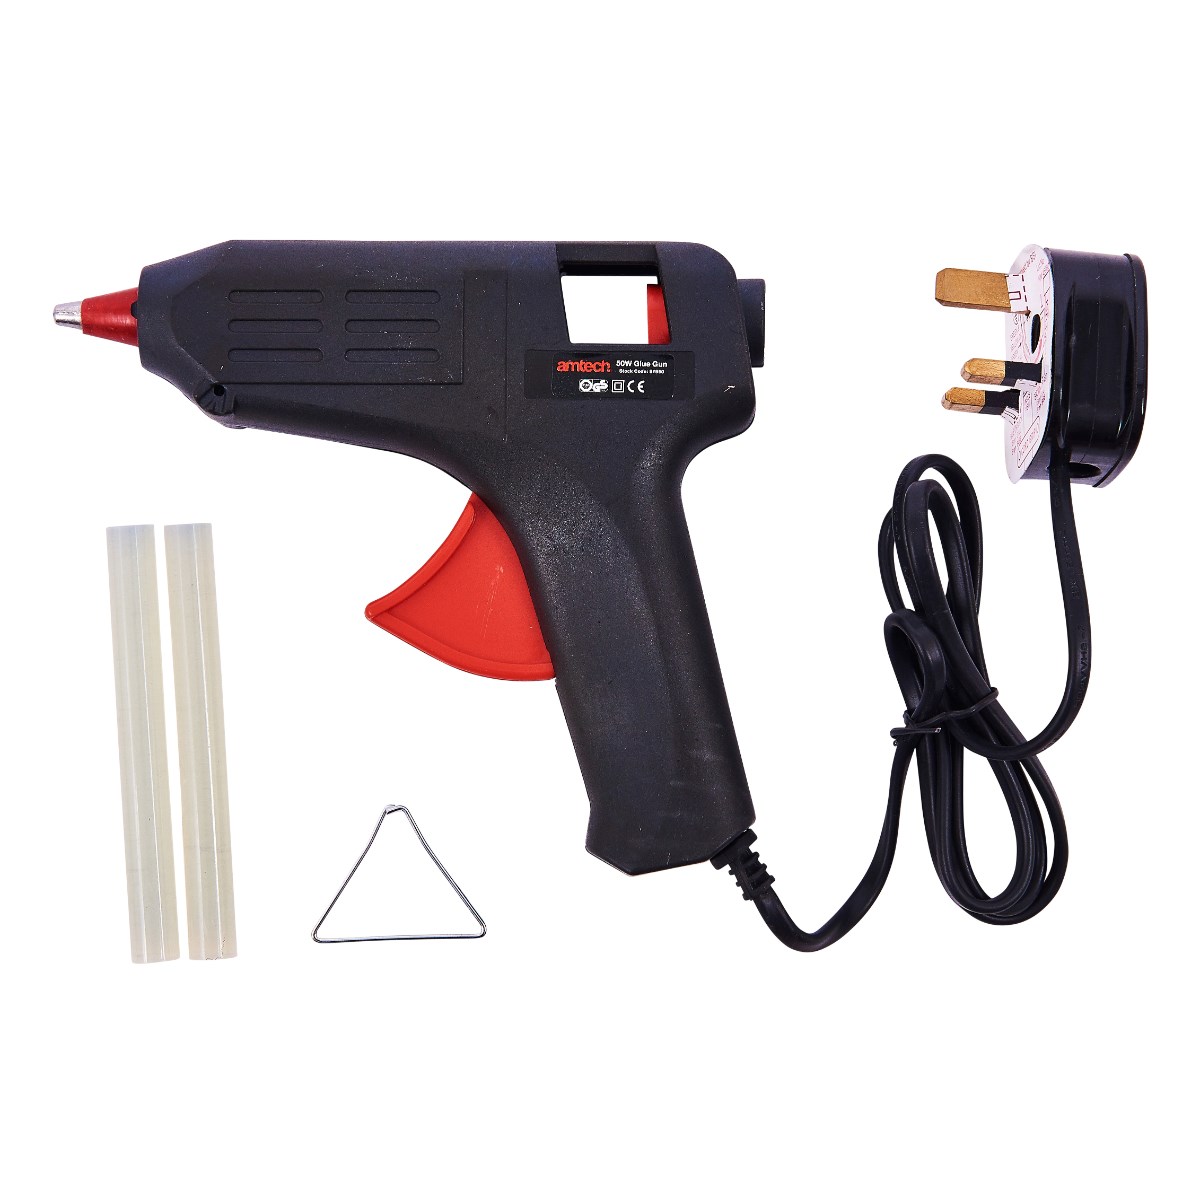 Amtech Hot Melt Glue Gun 50w Electric Trigger With 2 Adhesive Glue Sticks 